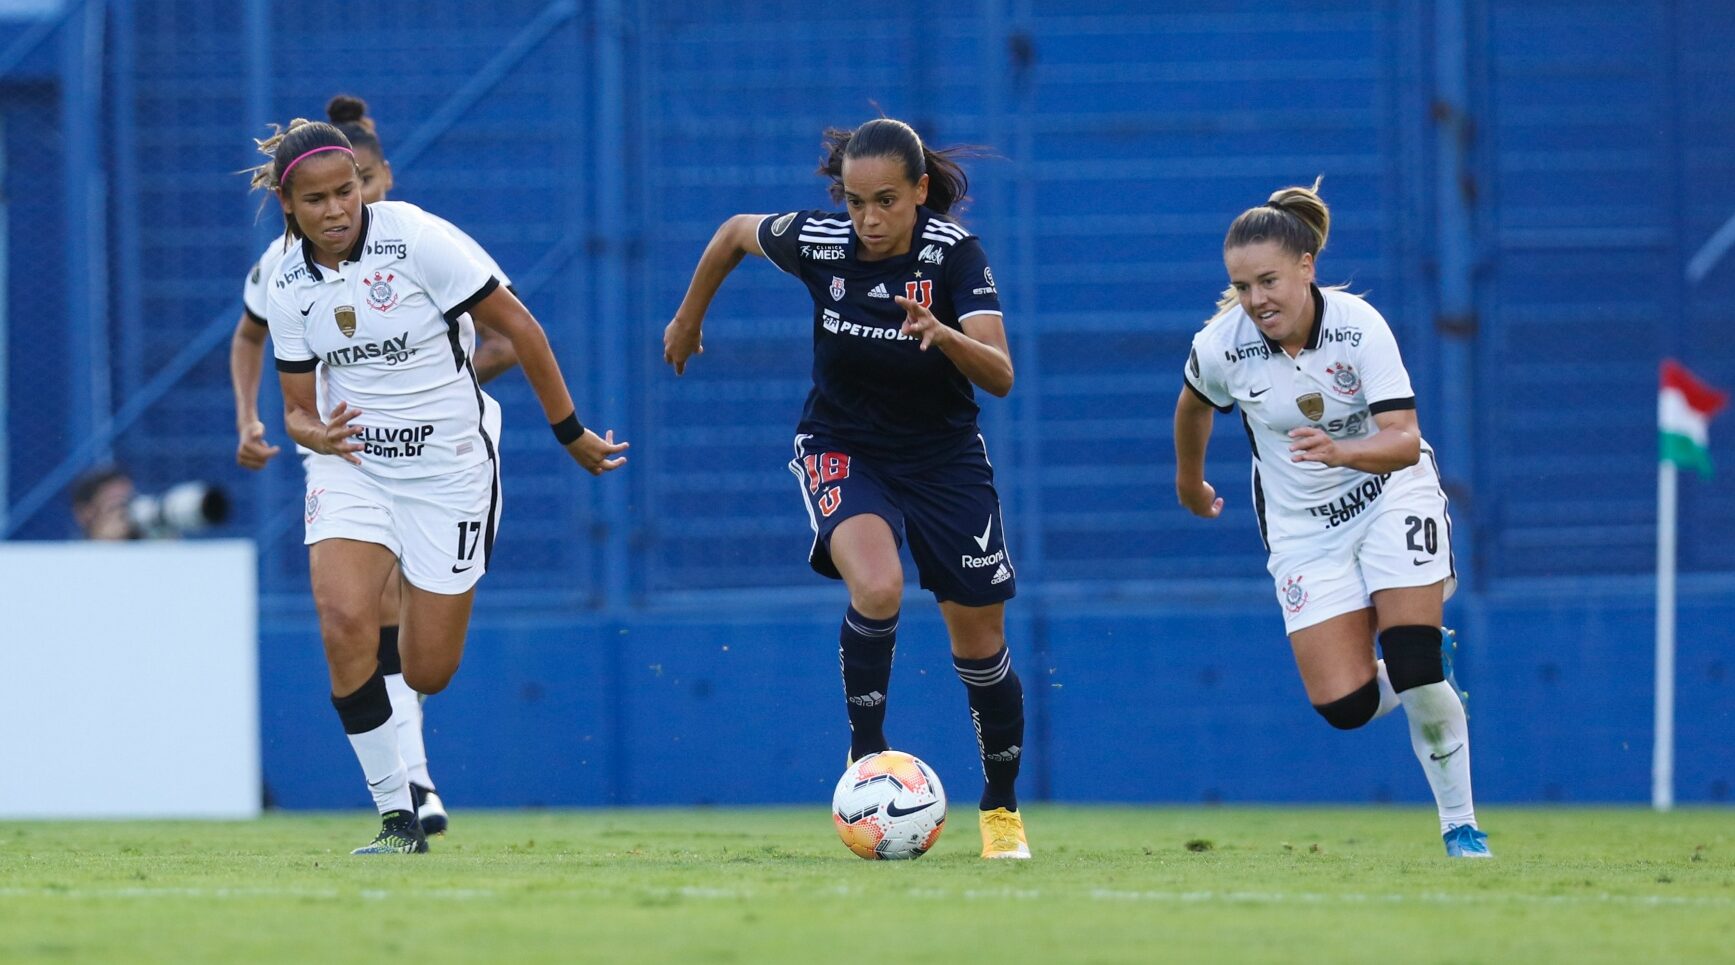 DirecTV y TNT Sports transmitirán la Copa Libertadores Femenina 2021